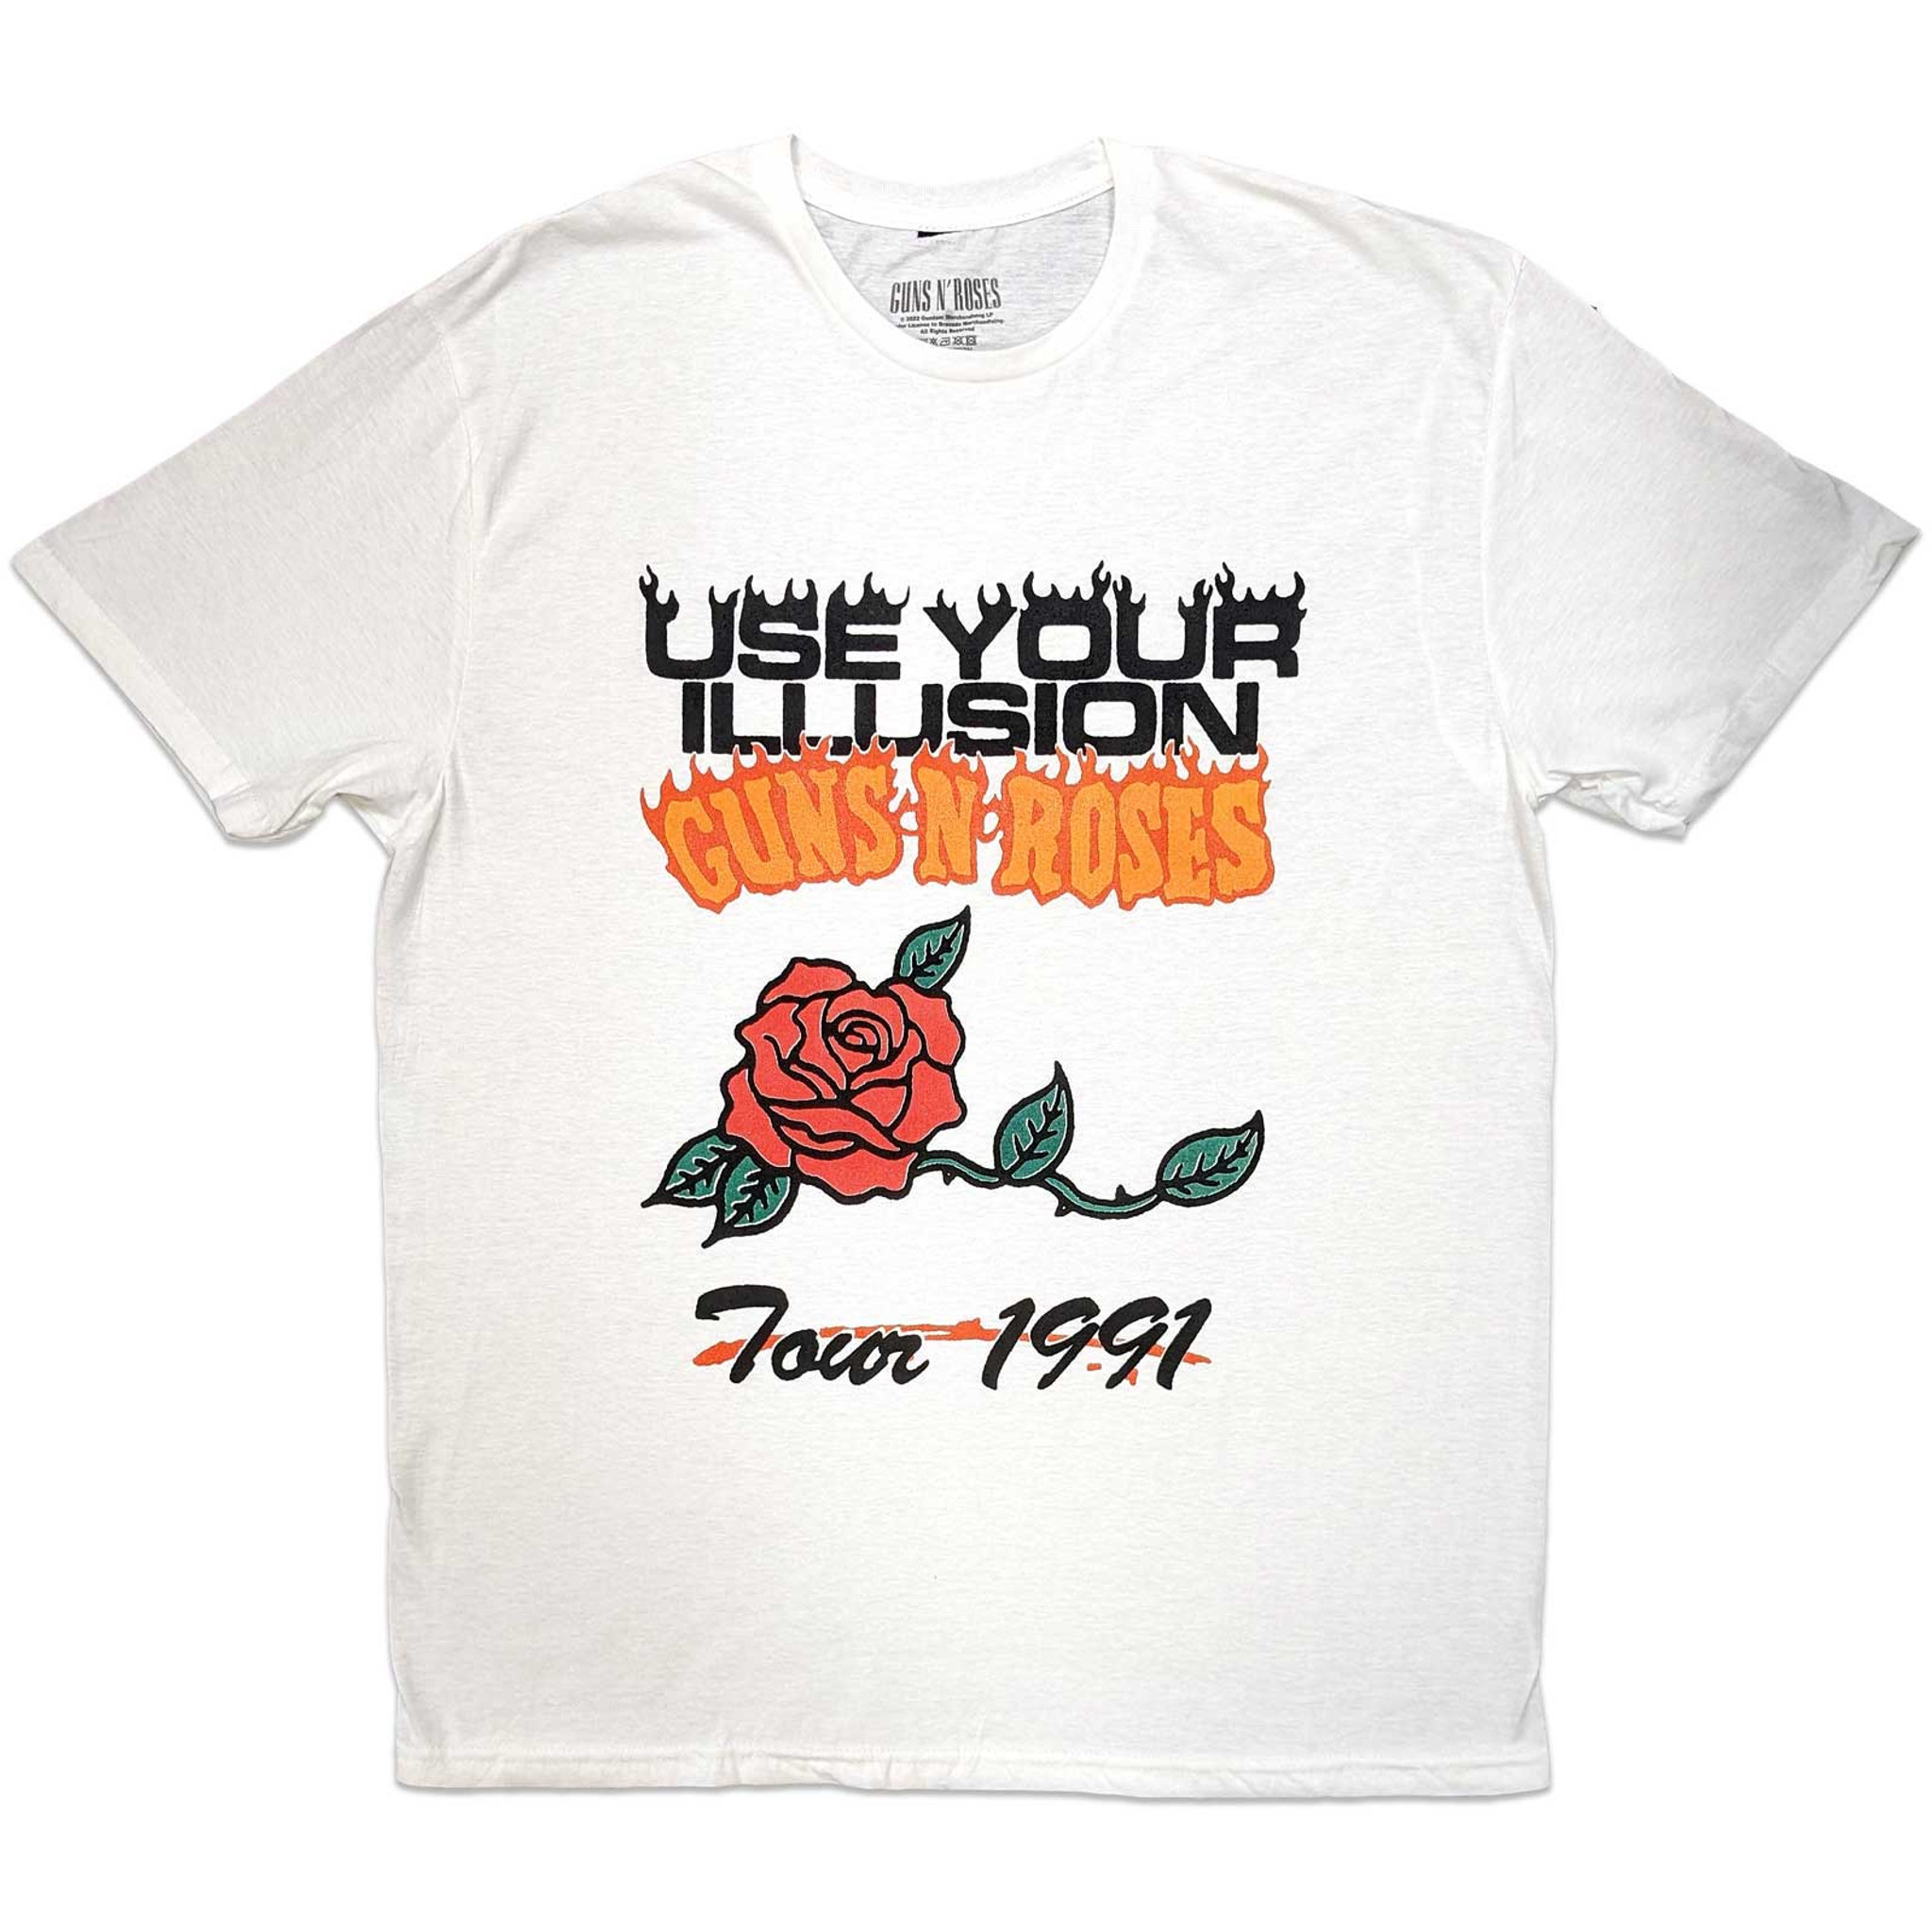 Guns N' Roses Unisex T Shirt: Use Your Illusion Tour